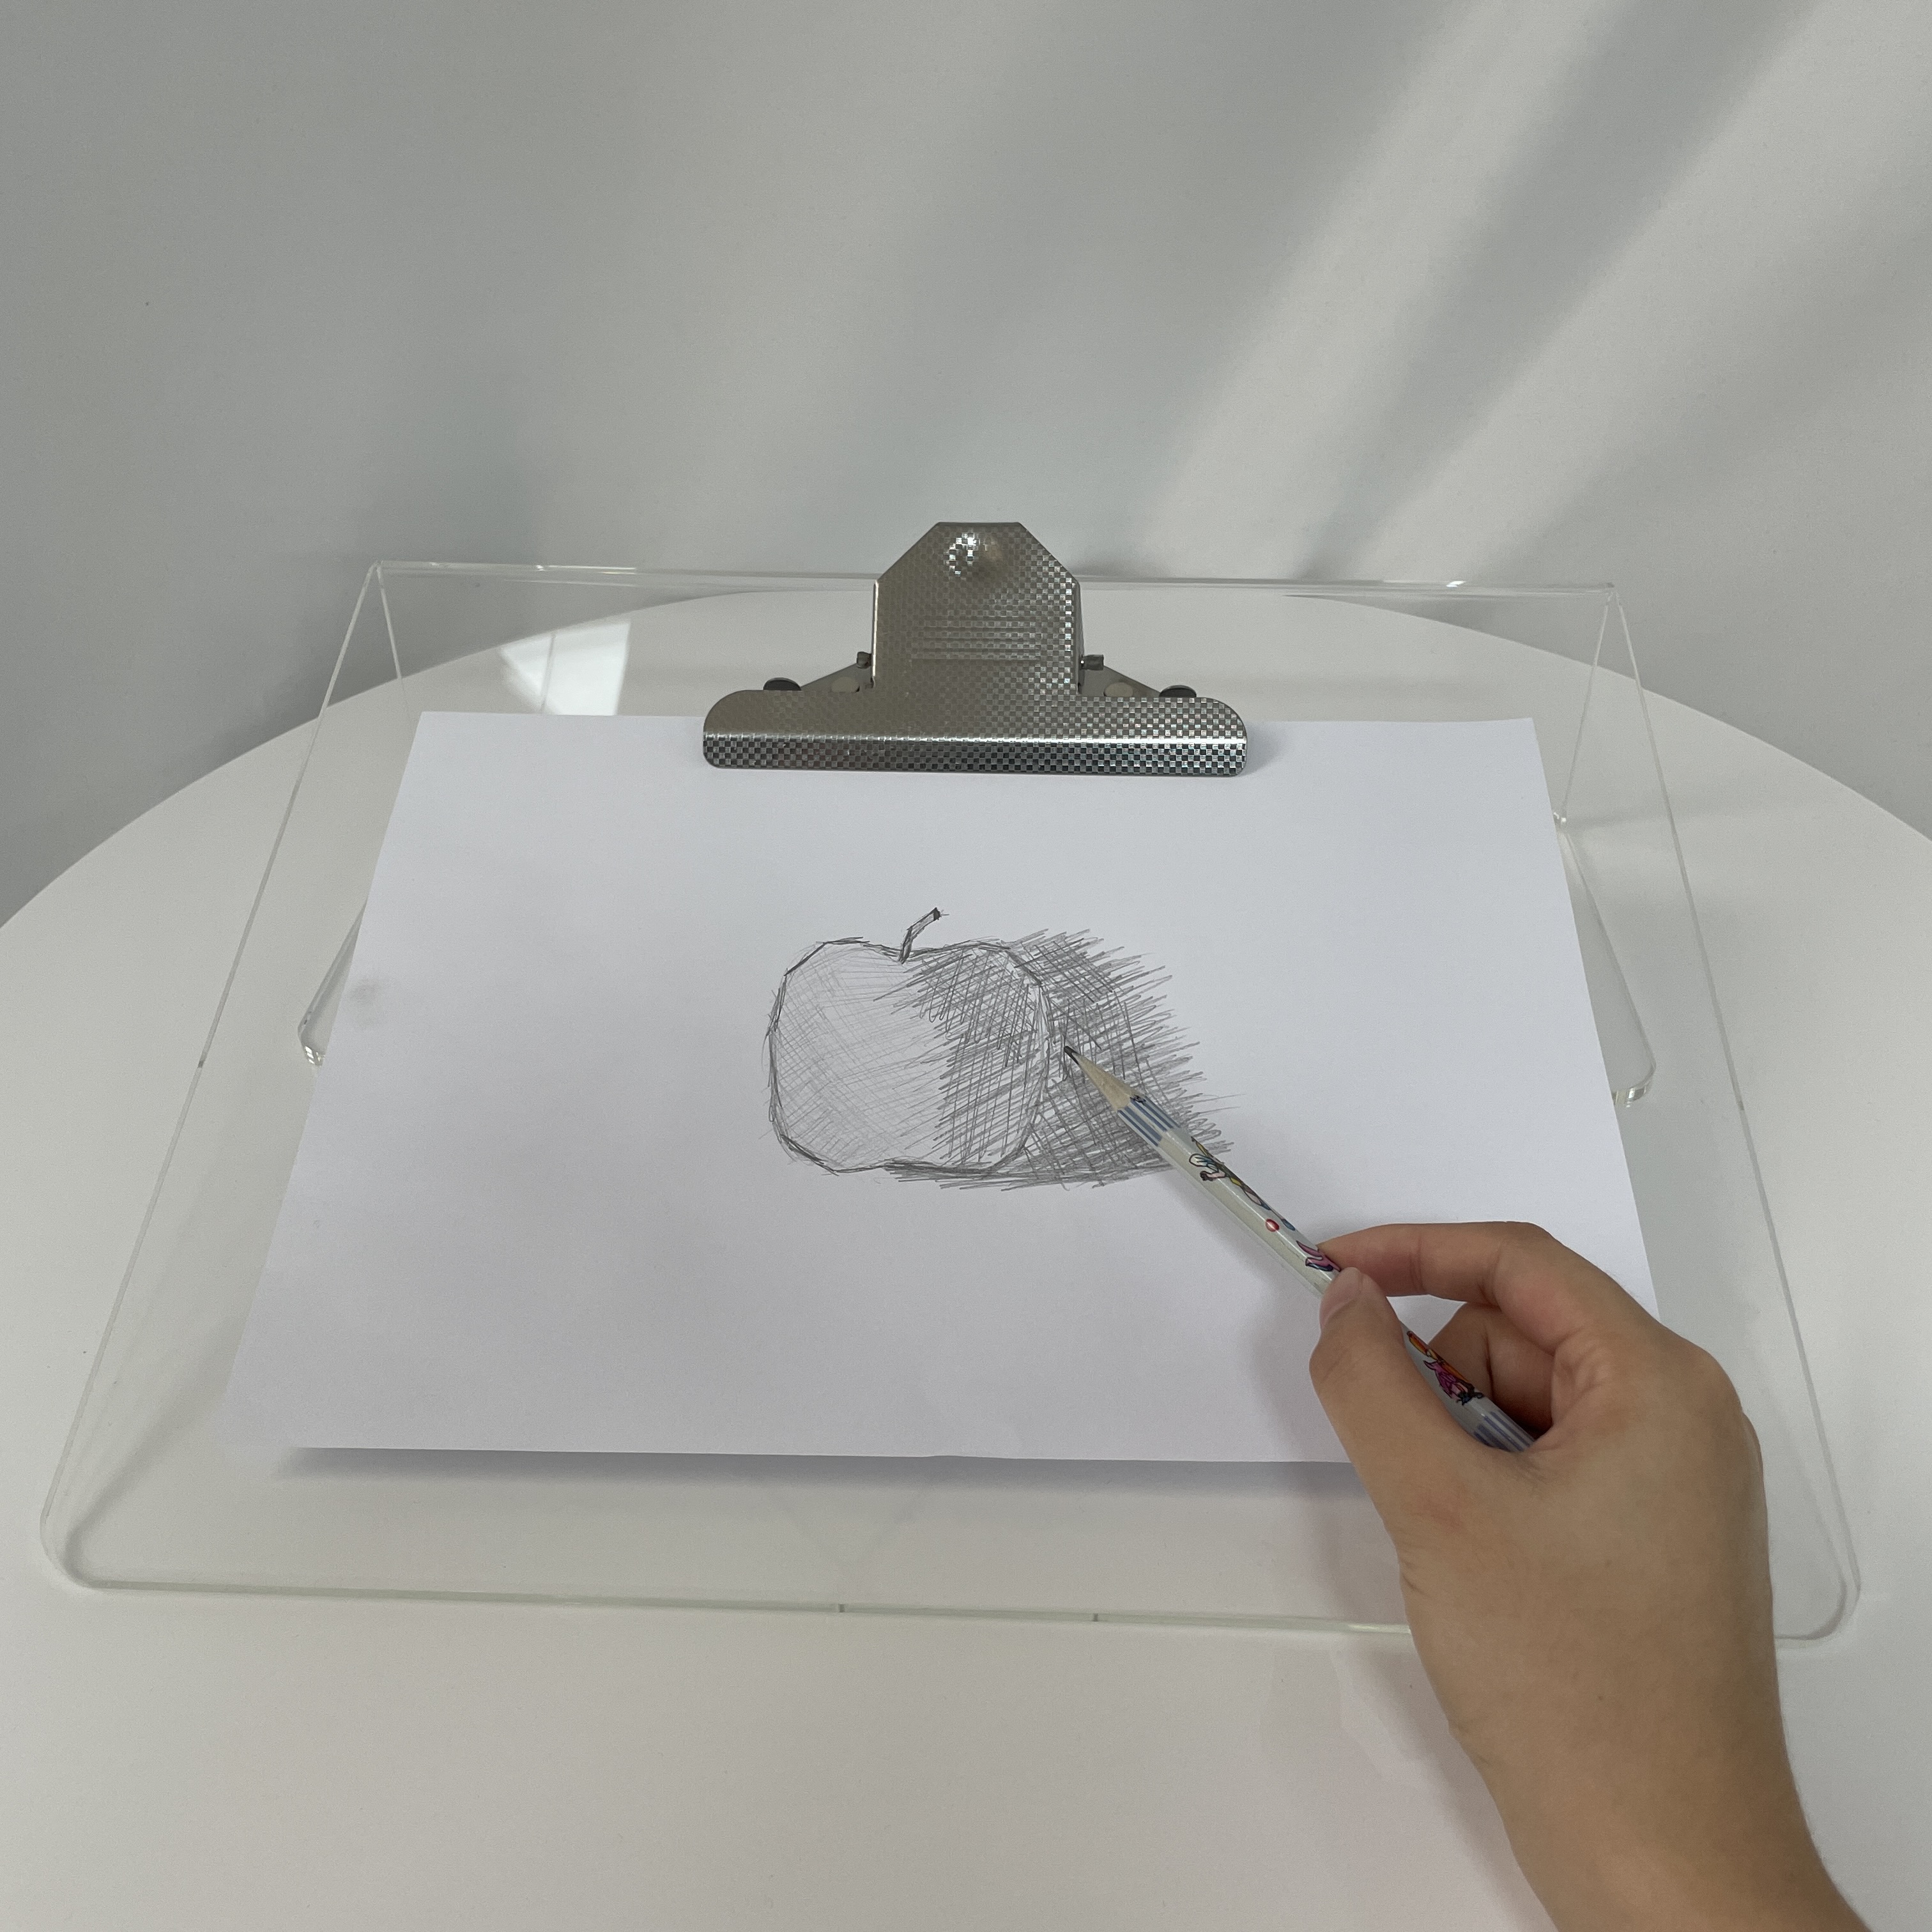 Pizarra blanca interactiva de borrado en seco personalizada para escritorio, oficina, hogar, escuela, pizarra mágica para niños, pizarra acrílica para escribir